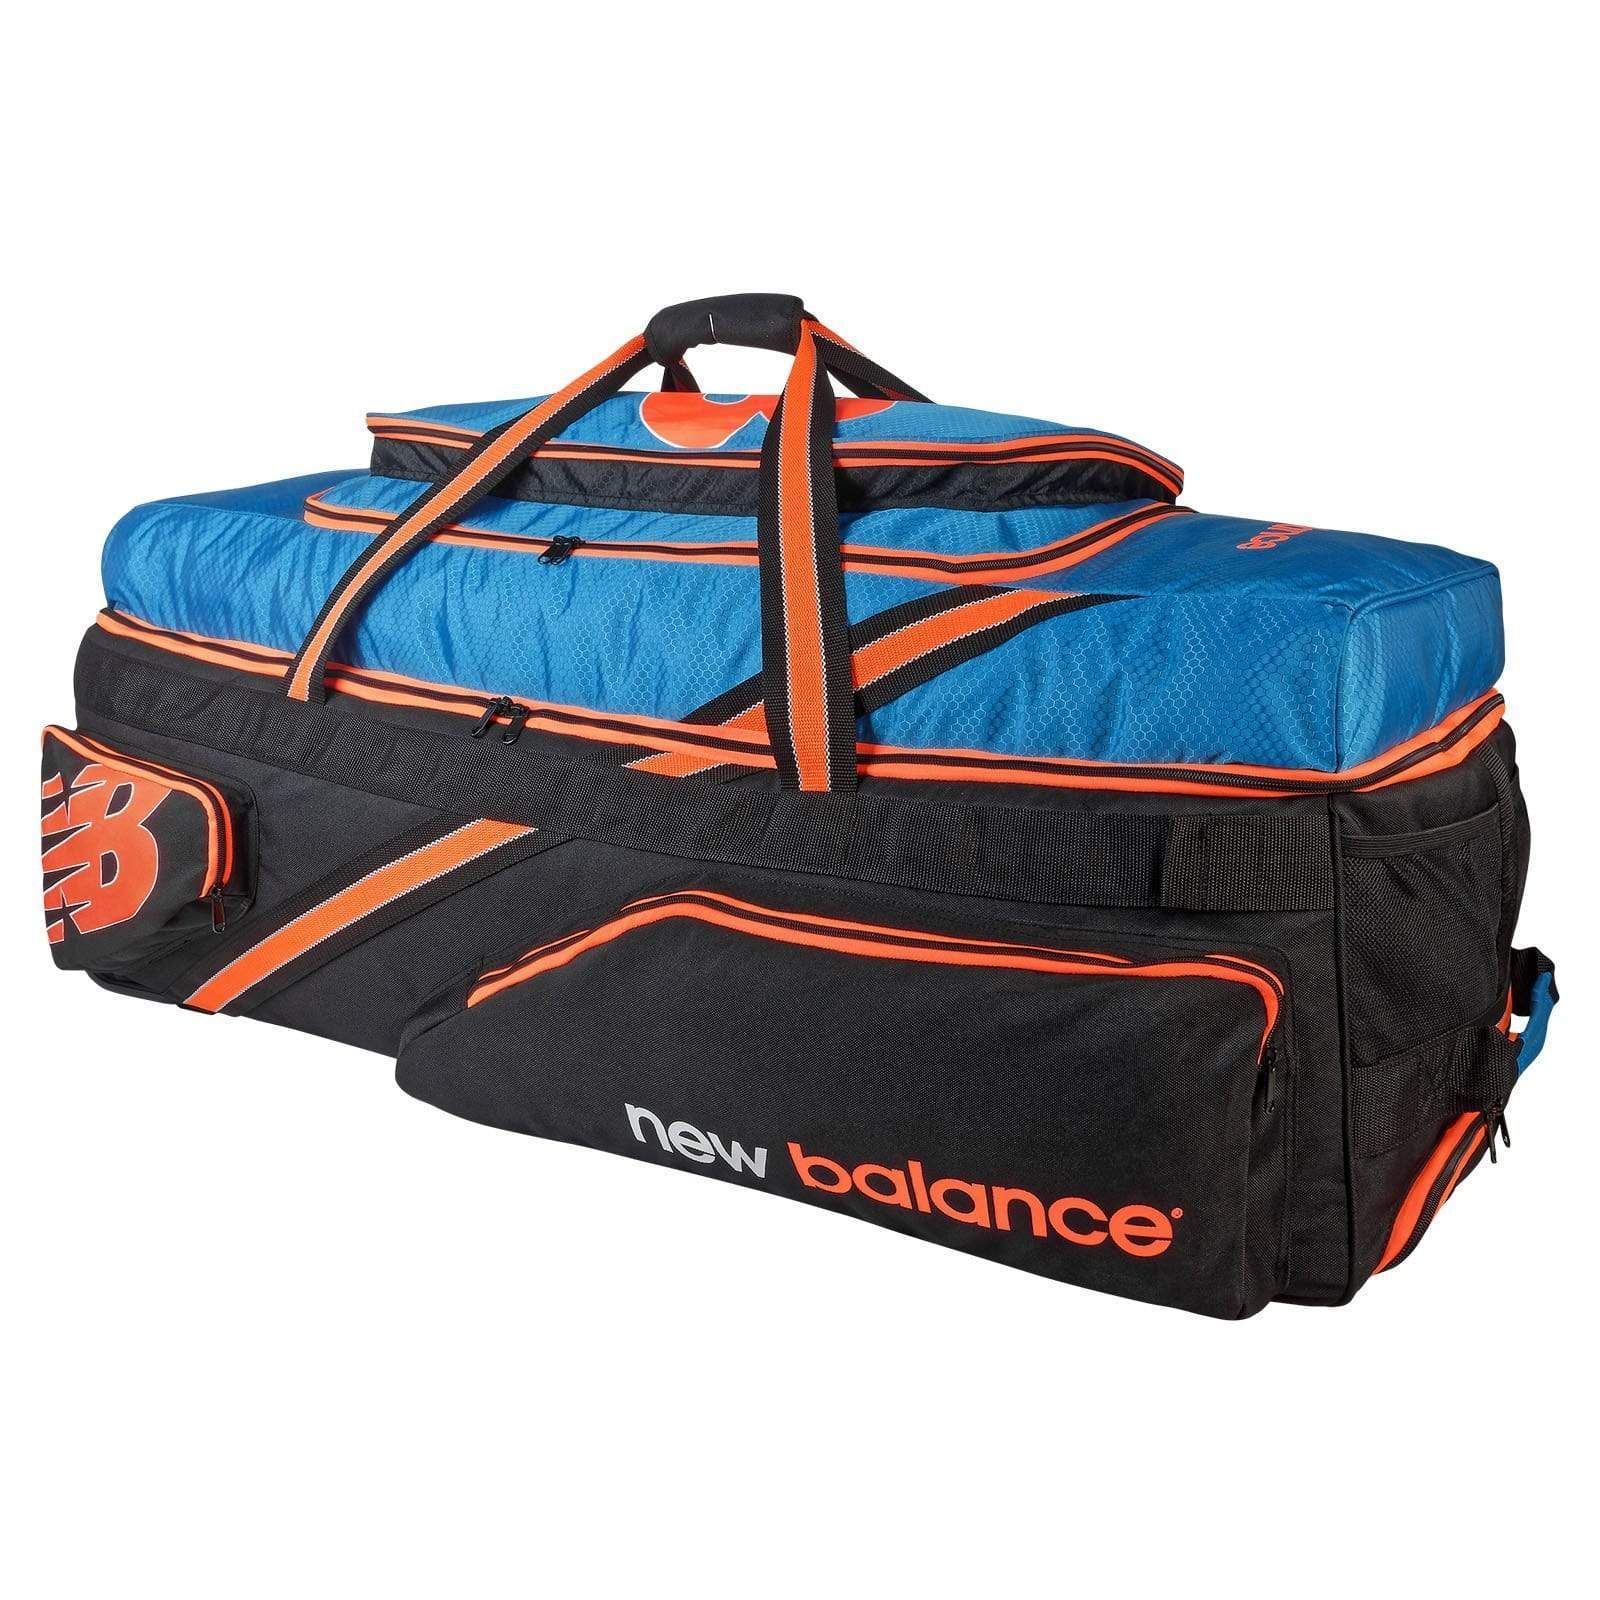 New Balance Cricket Bags New Balance DC1080 Wheelie Black/Blue Cricket Kit Bag